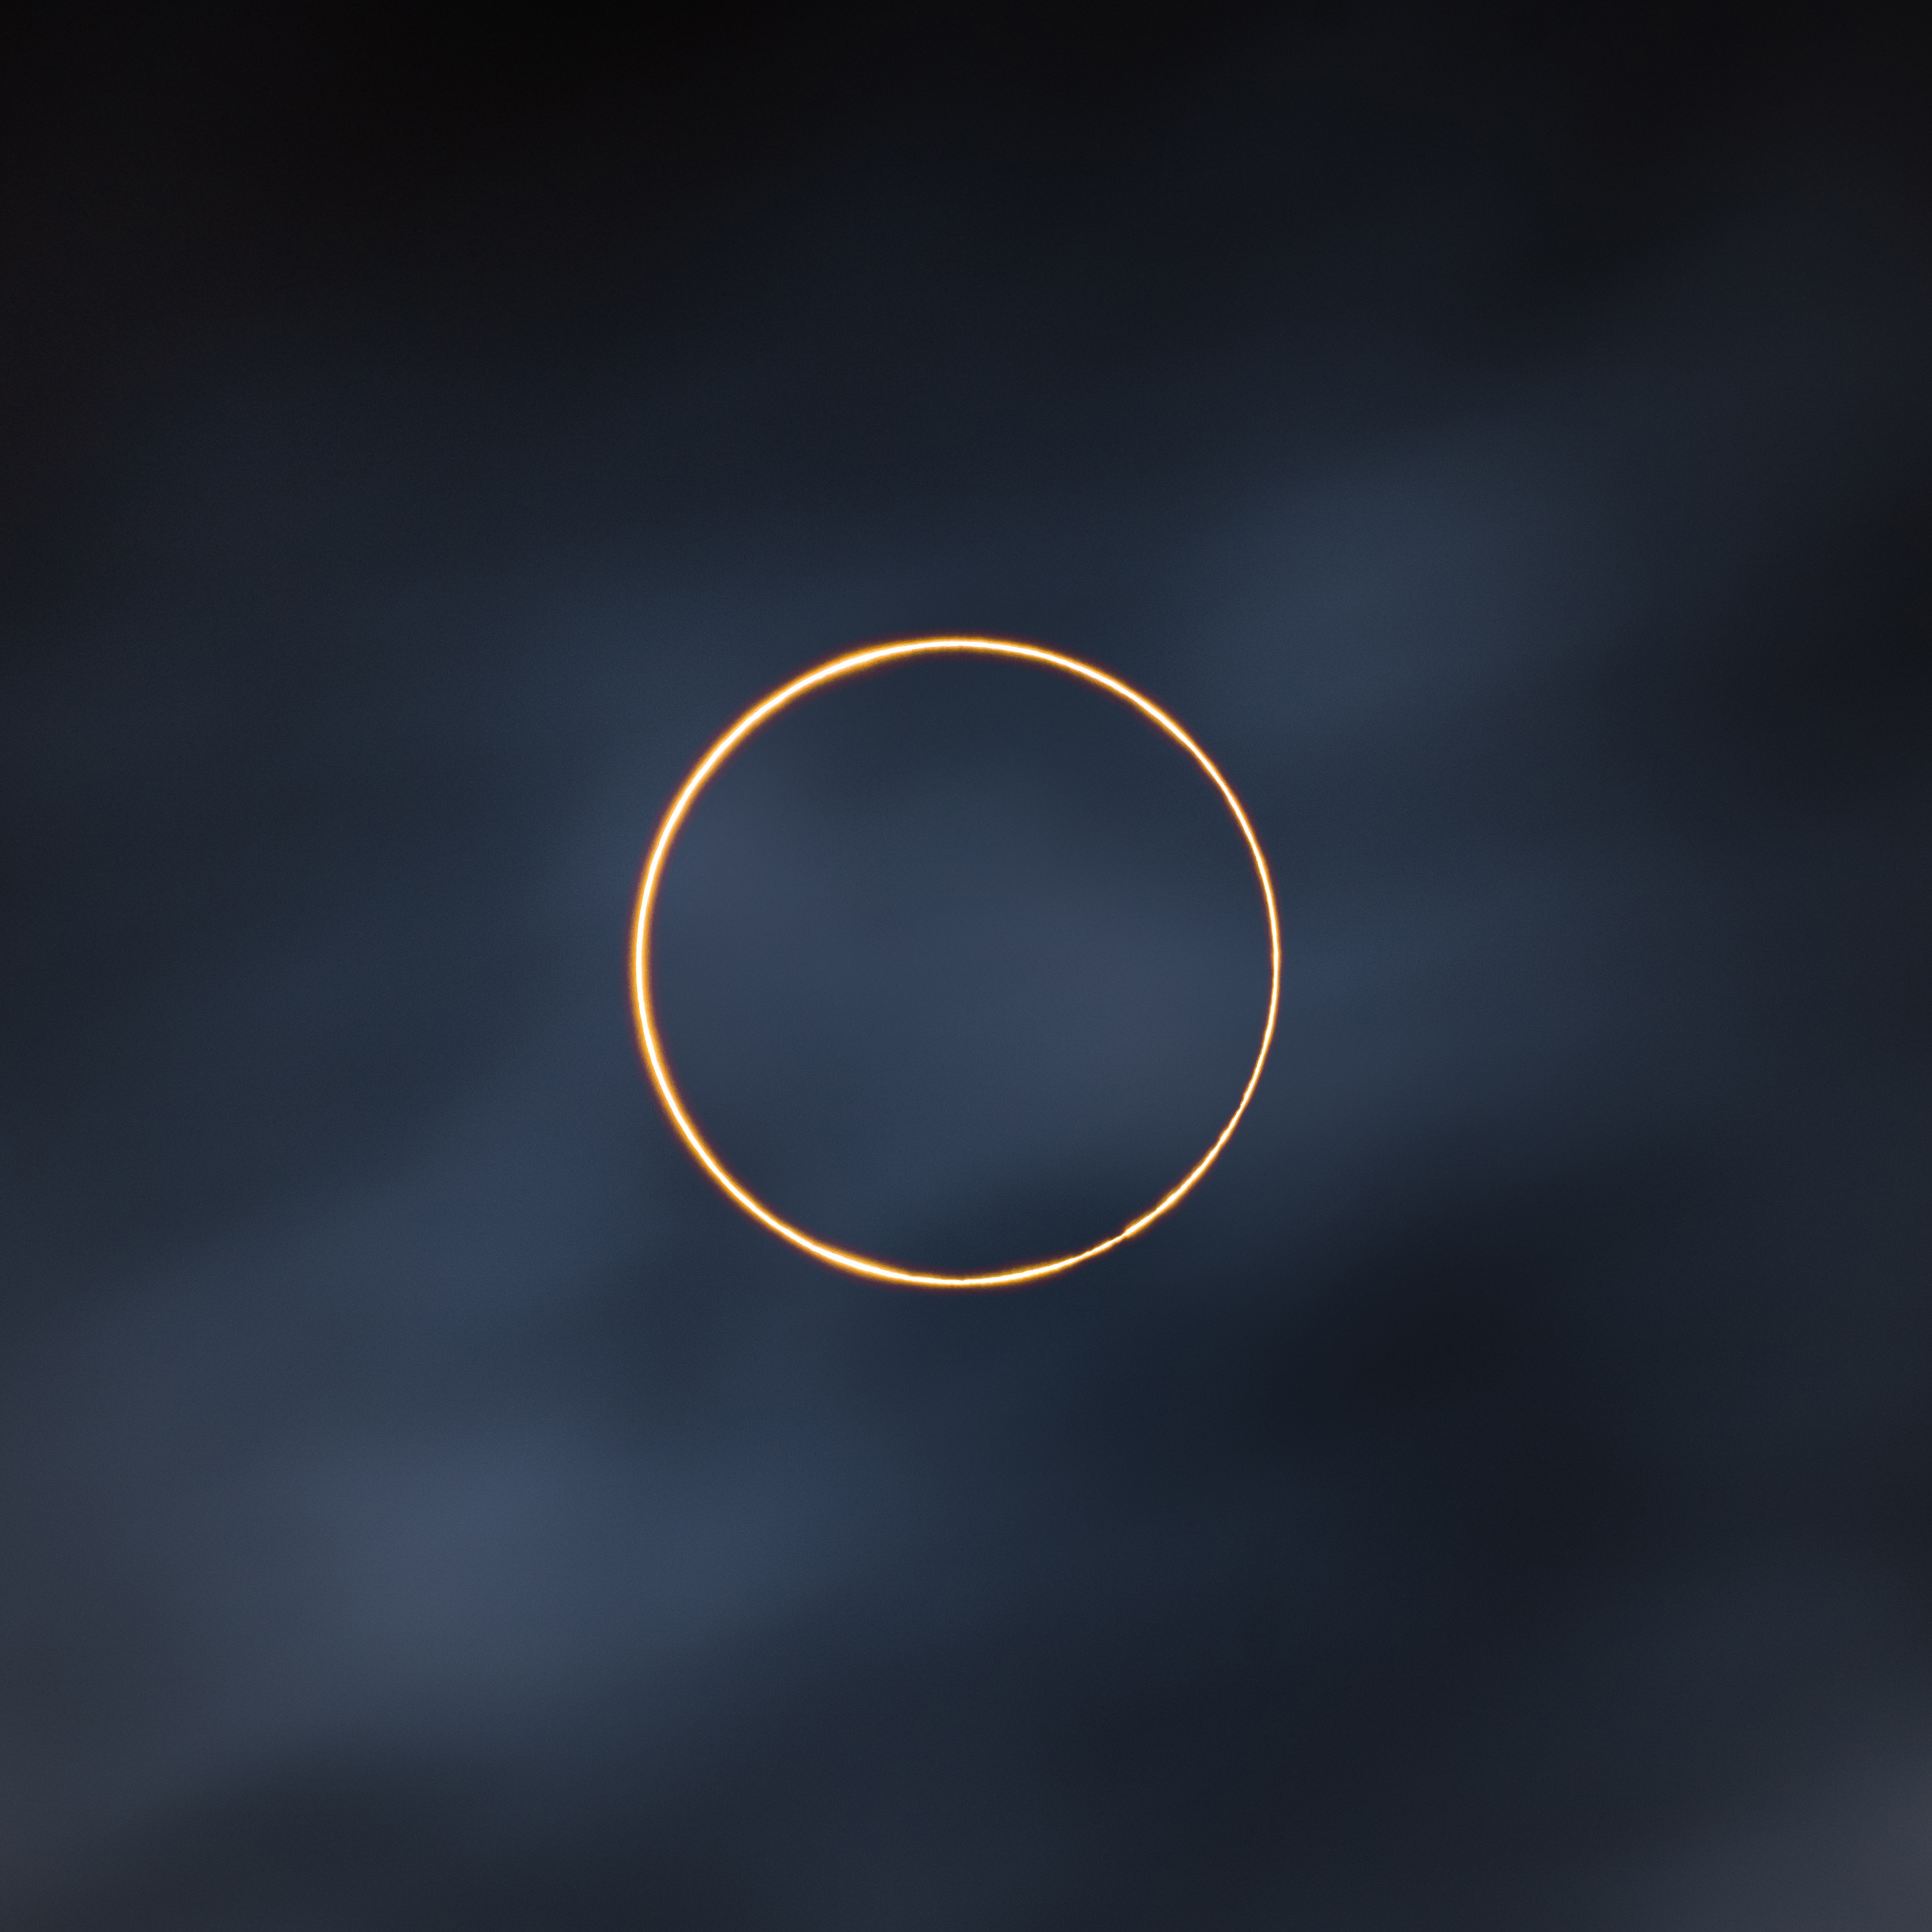 Sky Eclipse Solar Eclipse Astronomy Nature Dark 3000x3000